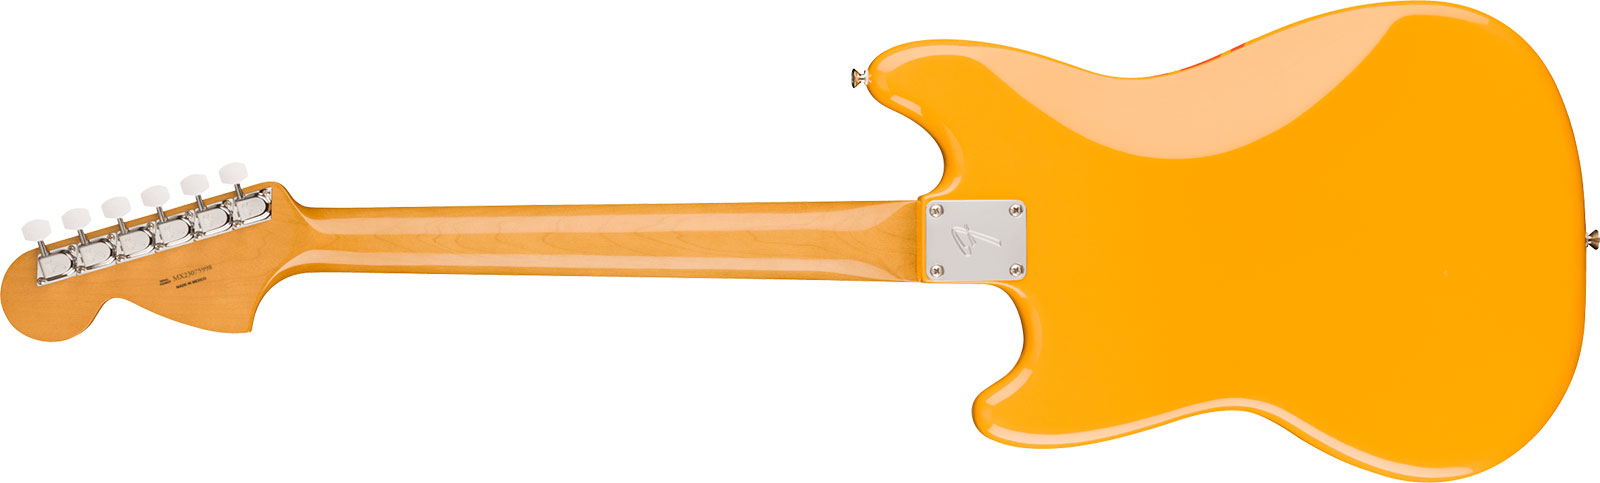 Fender Mustang 70s Competition Vintera 2 Mex 2s Trem Rw - Competition Orange - Guitarra electrica retro rock - Variation 1